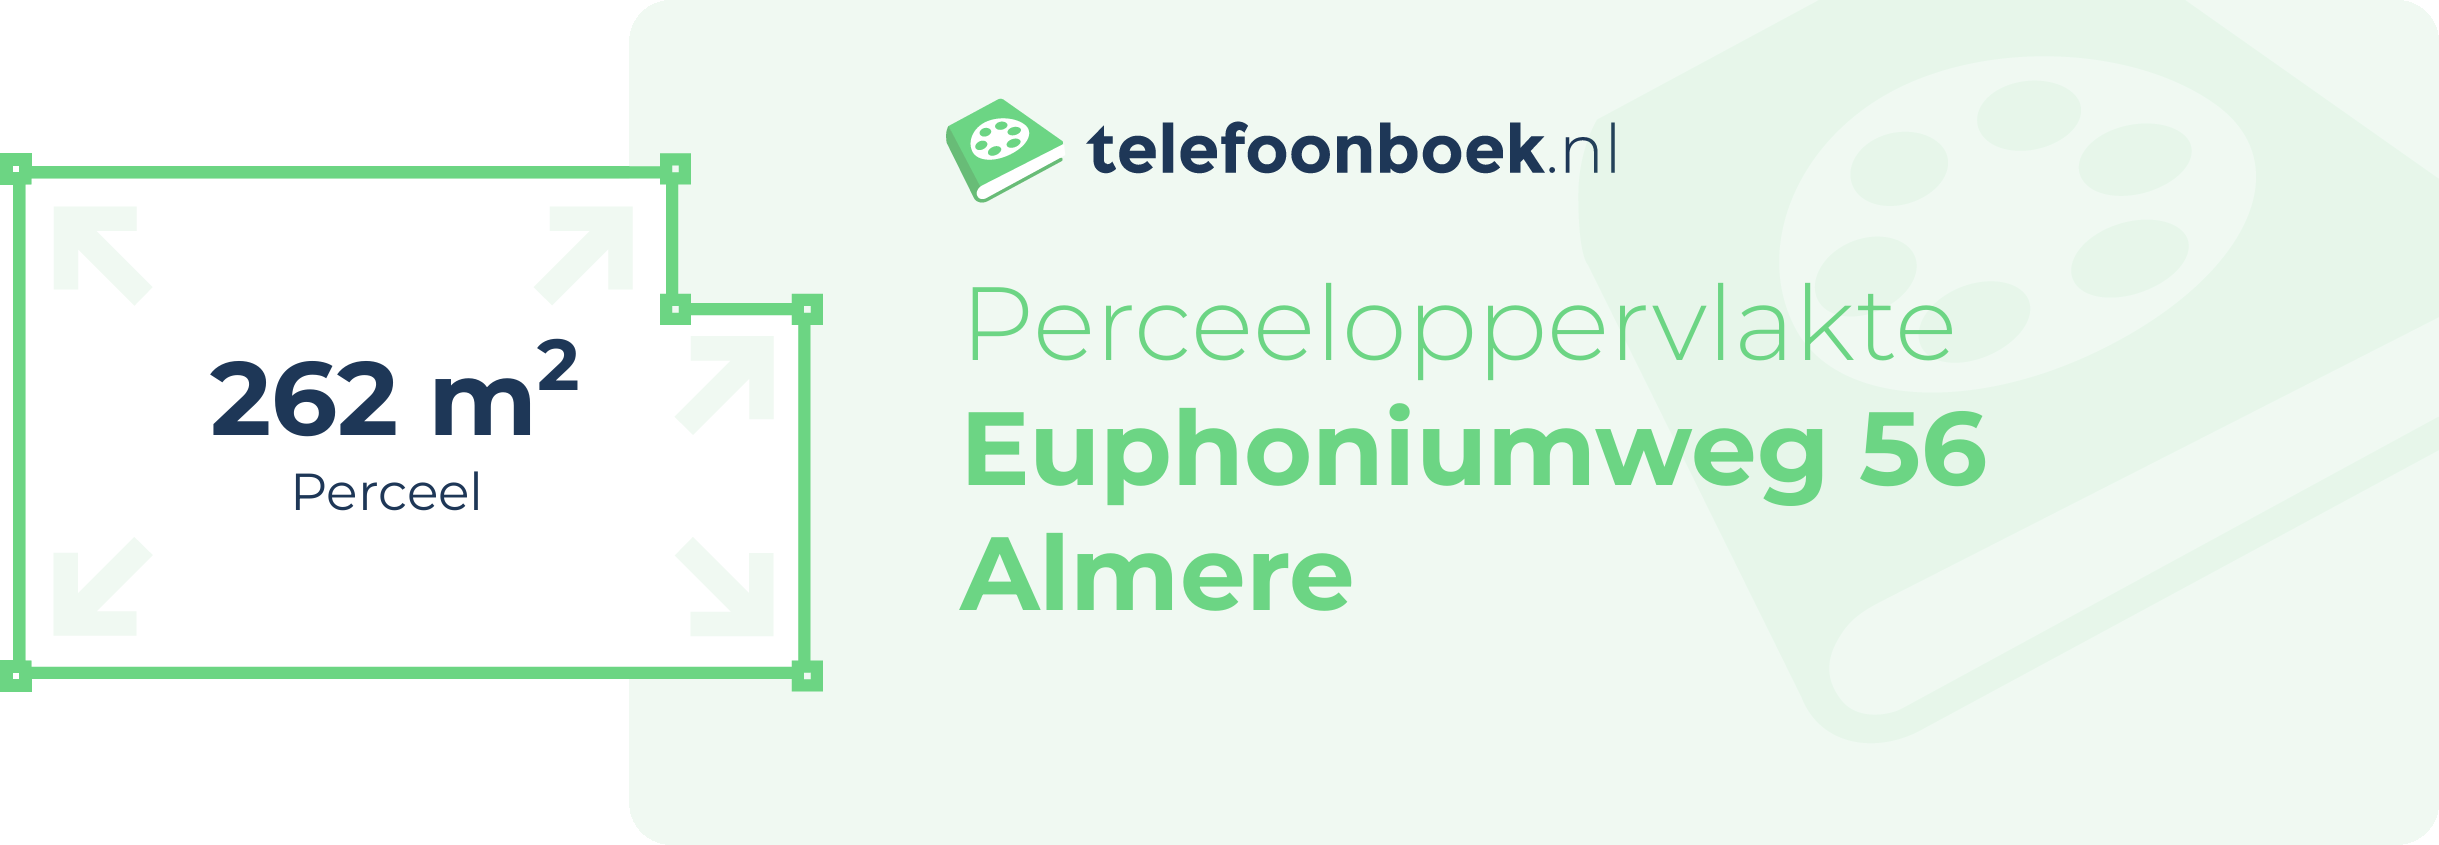 Perceeloppervlakte Euphoniumweg 56 Almere